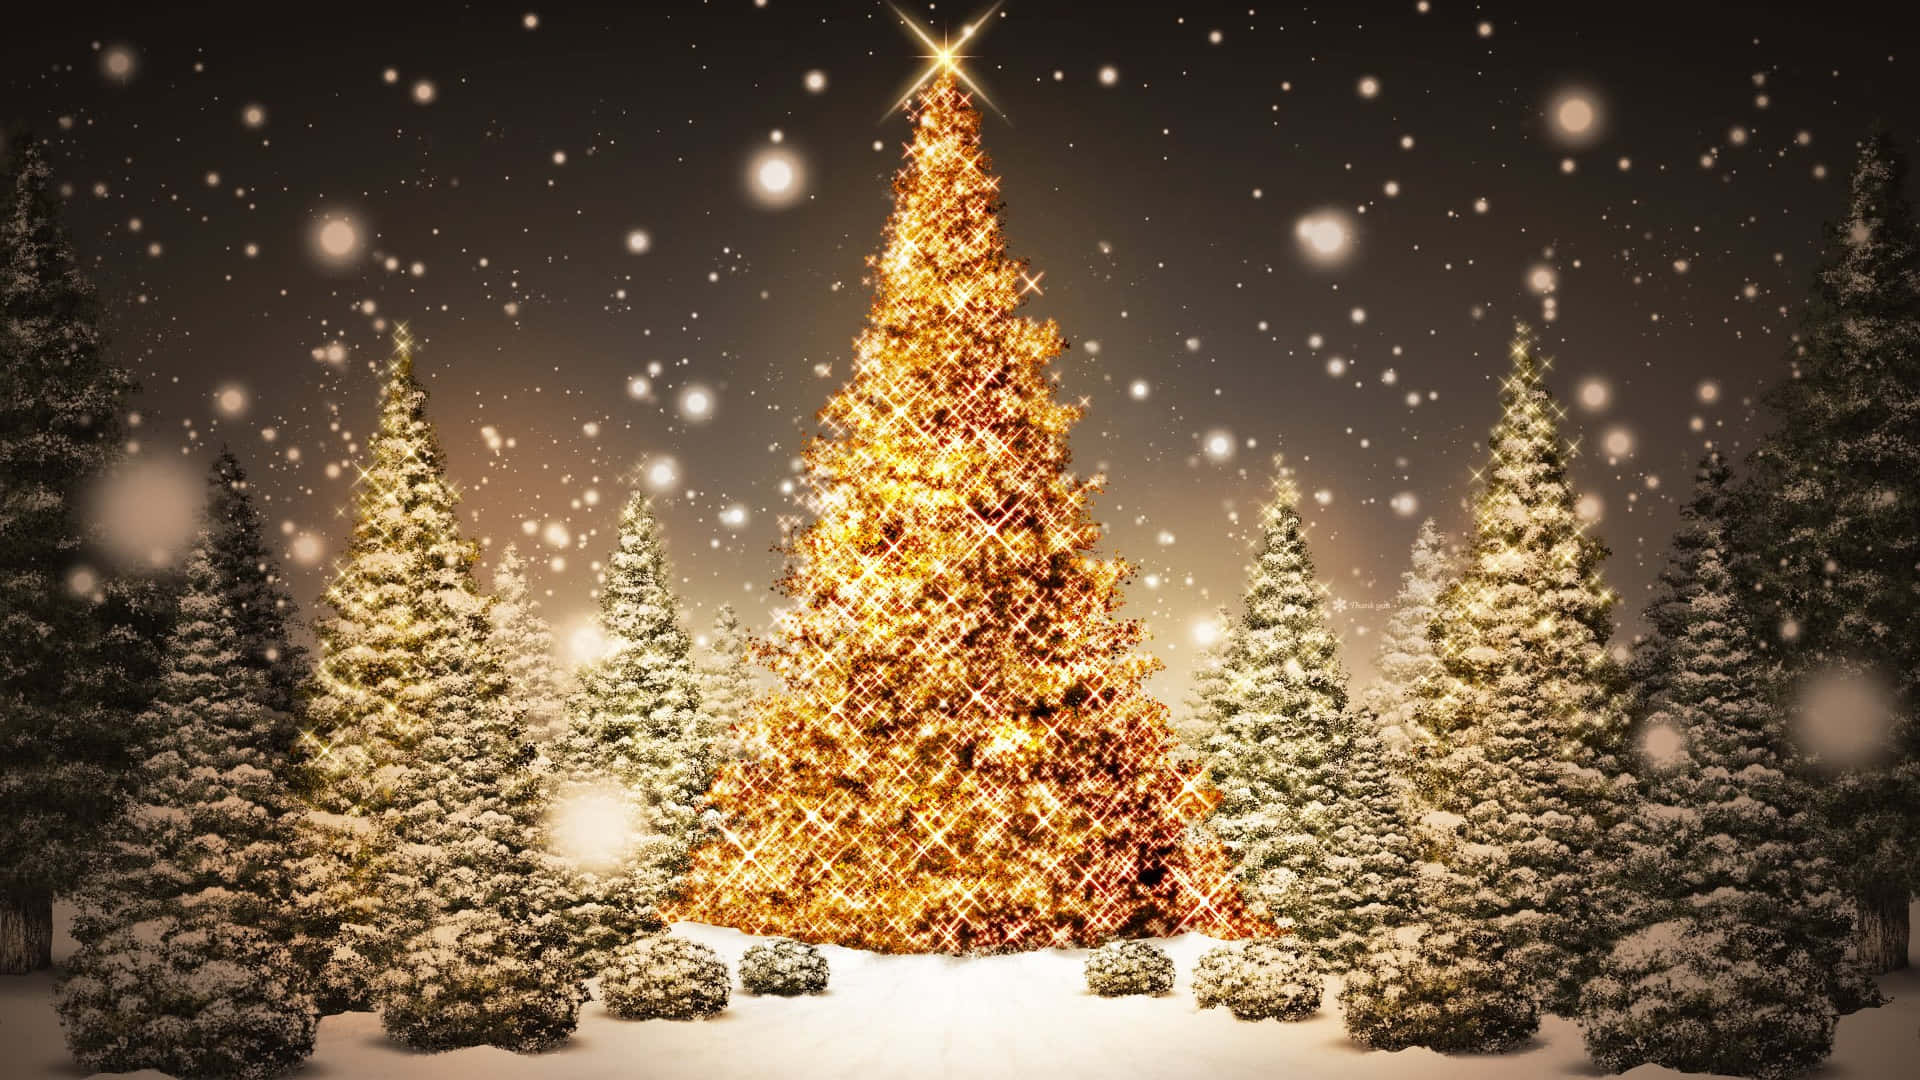 Twinkling Christmas Tree Winter Wonderland Wallpaper